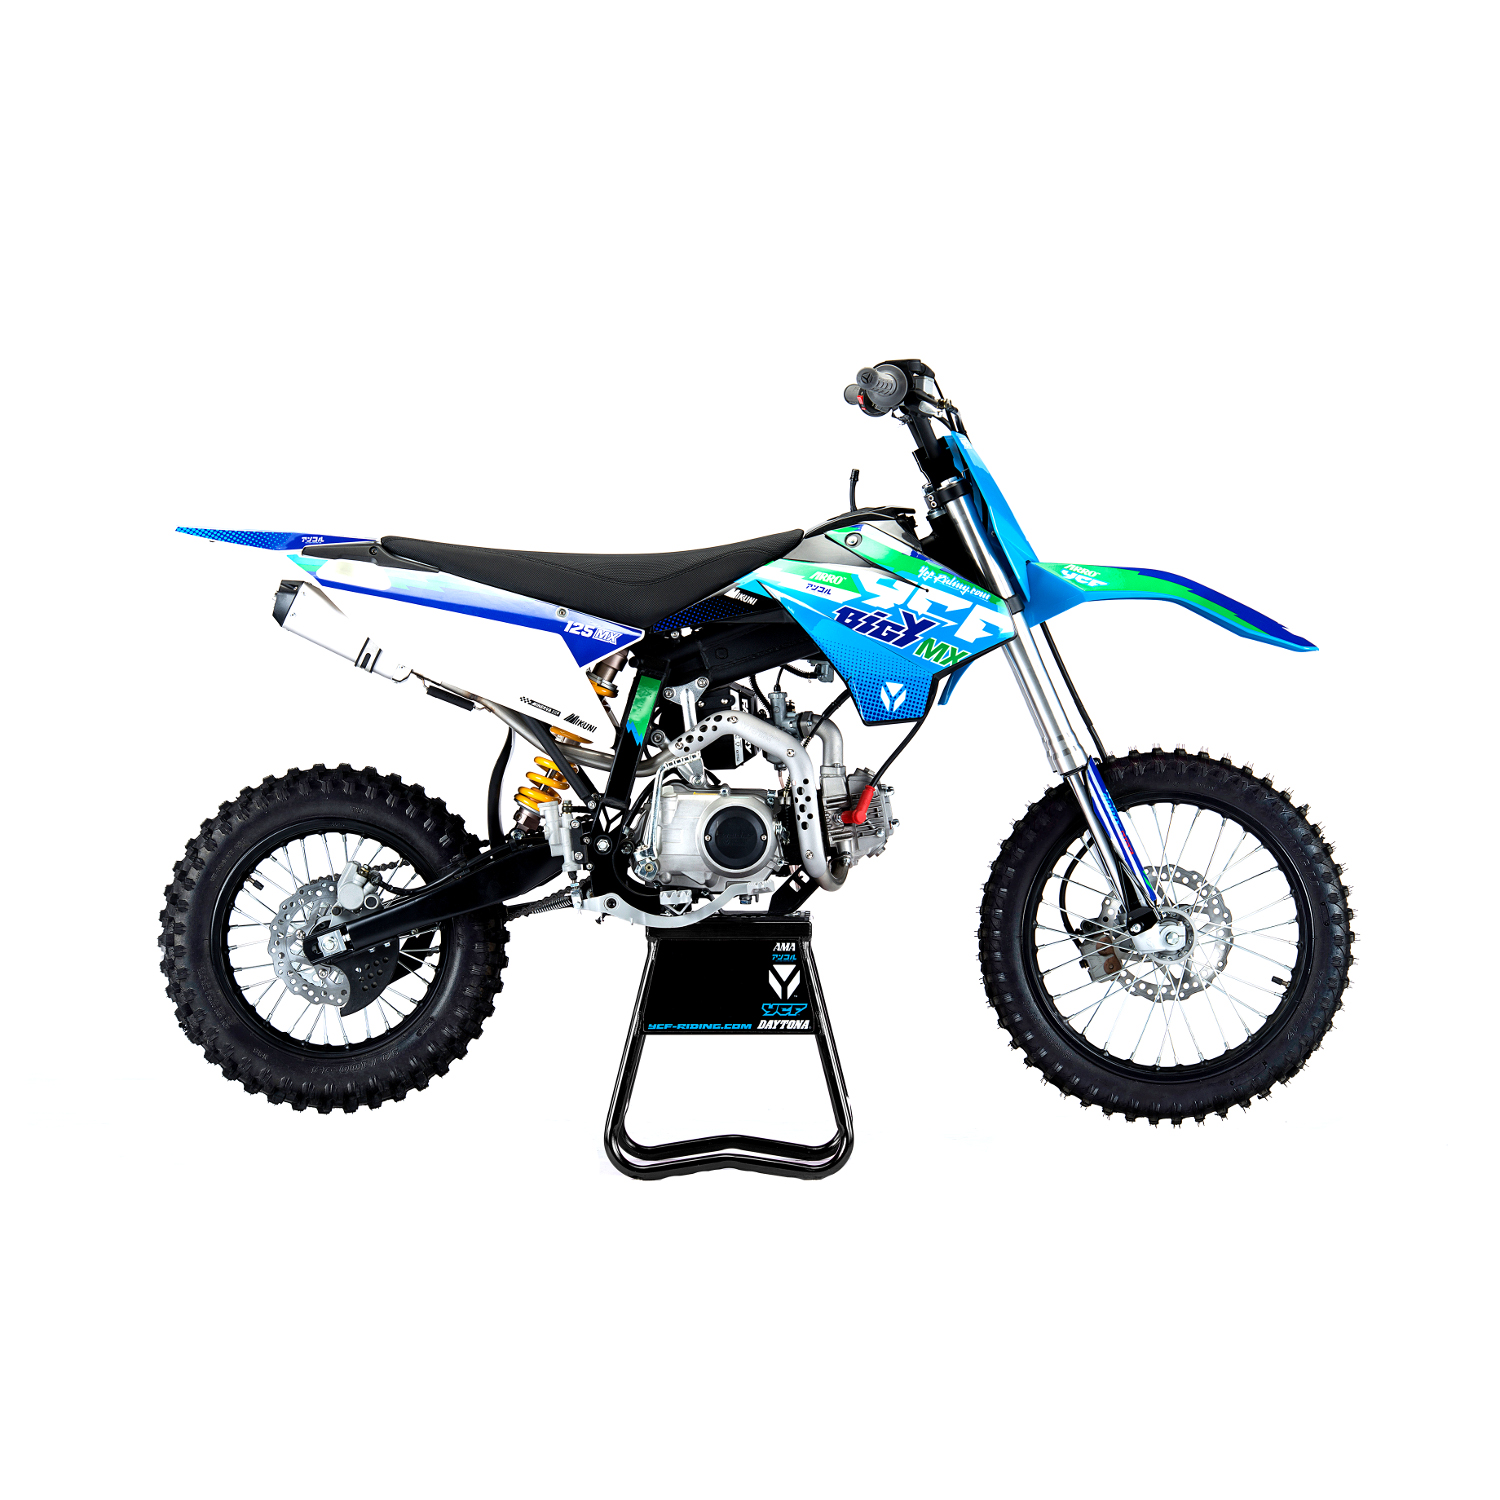 YCF Pitbike Bigy 125 MX - Easy To Pick Up